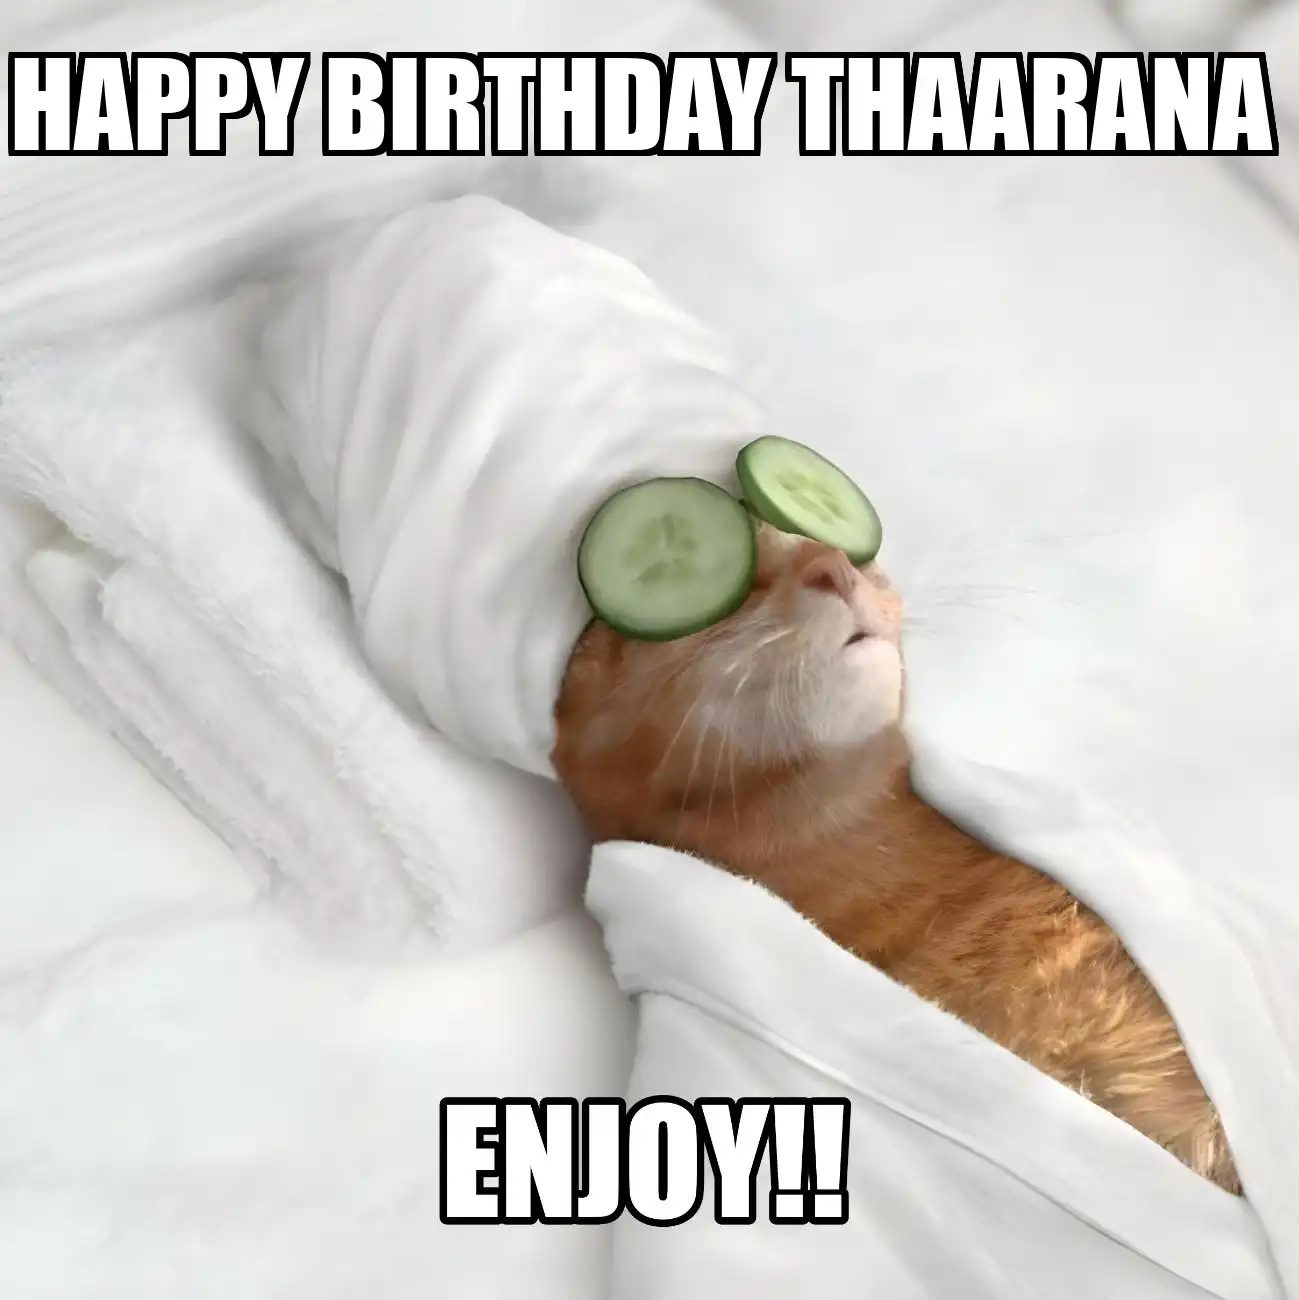 Happy Birthday Thaarana Enjoy Cat Meme